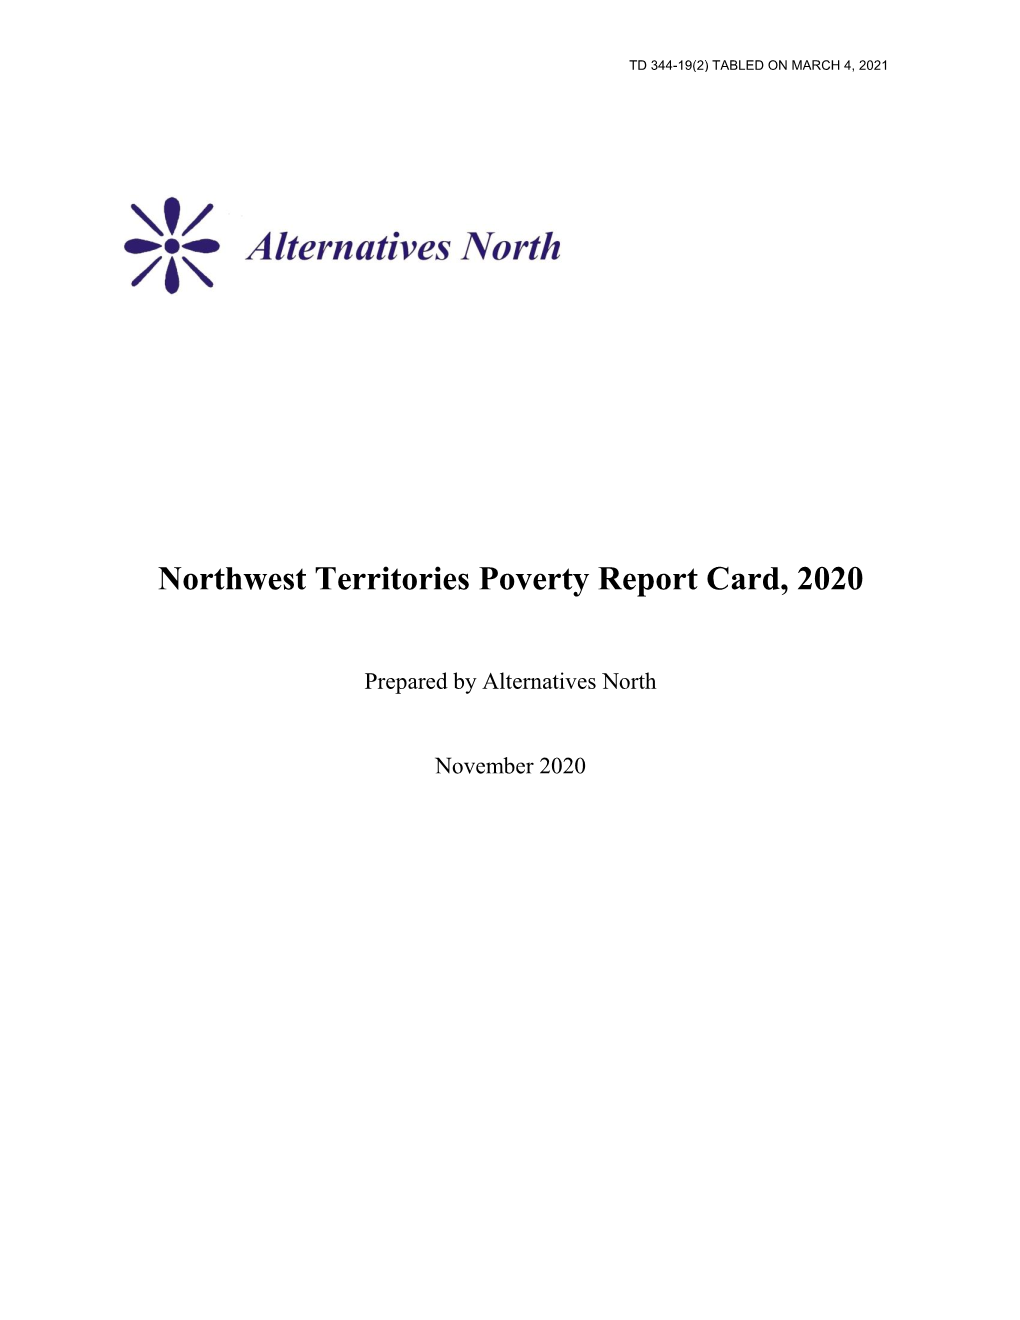 Northwest Territories Poverty Report Card, 2020